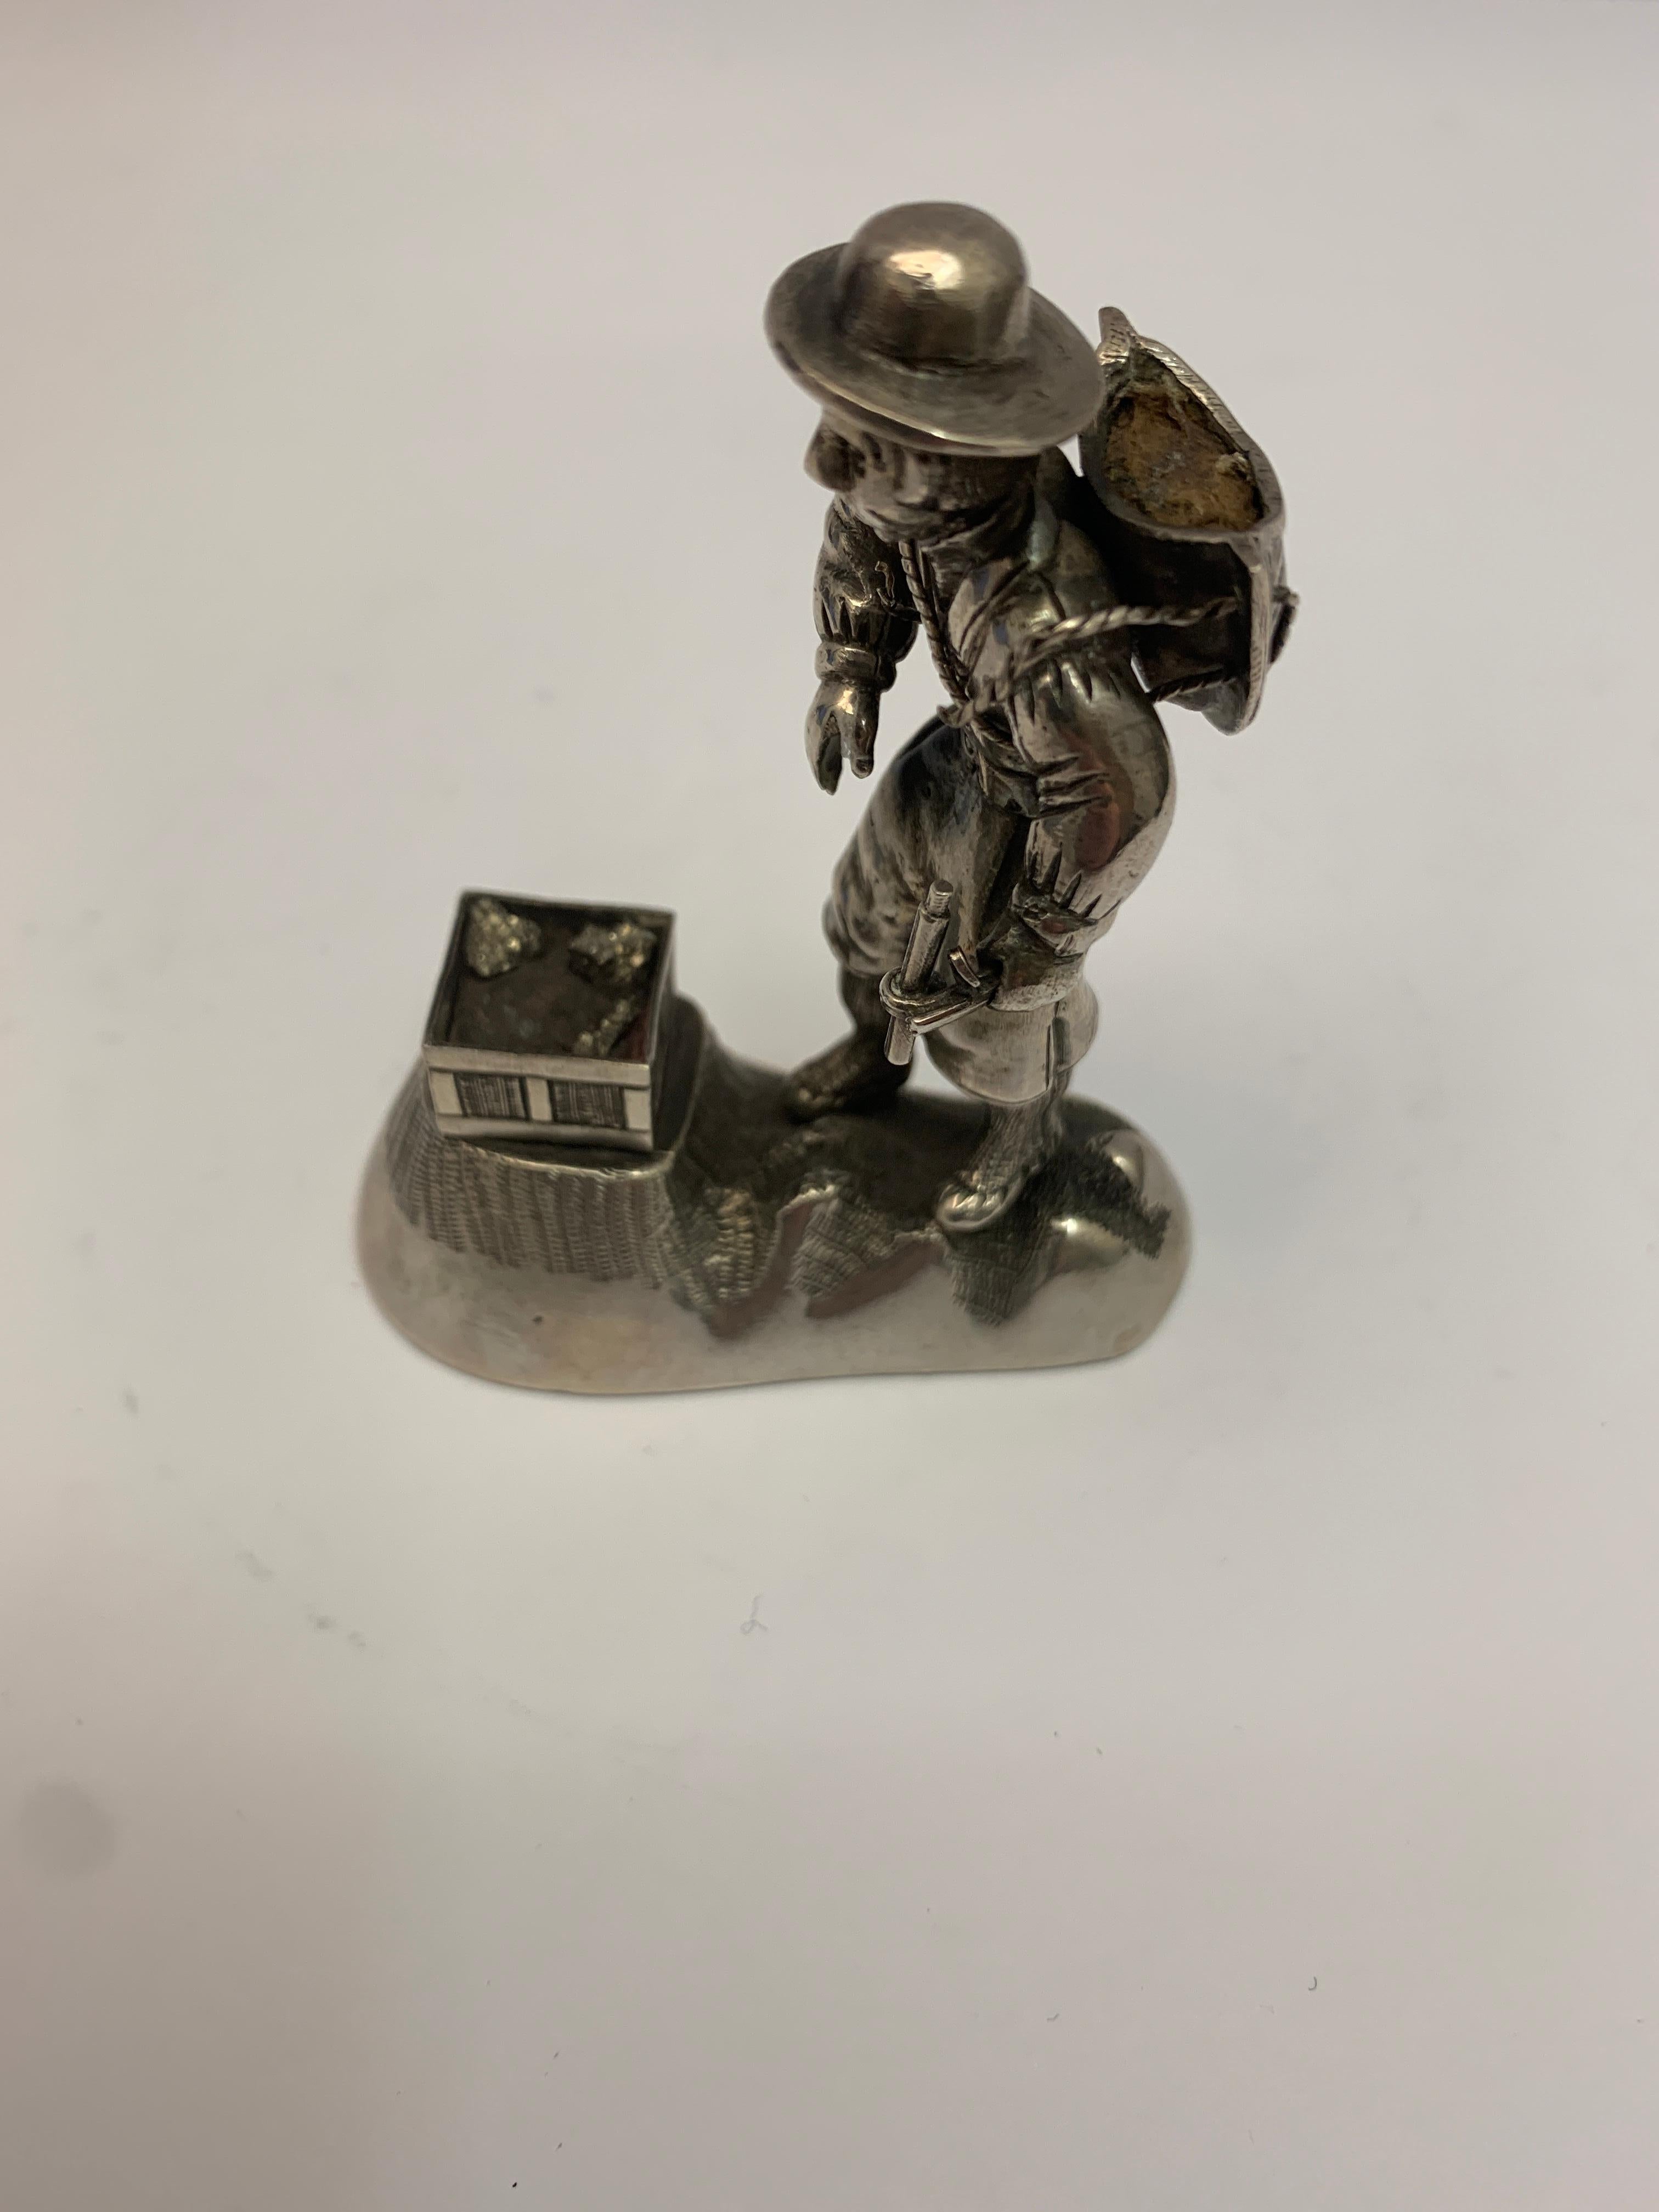 Small antique silver figural model of a prospector.